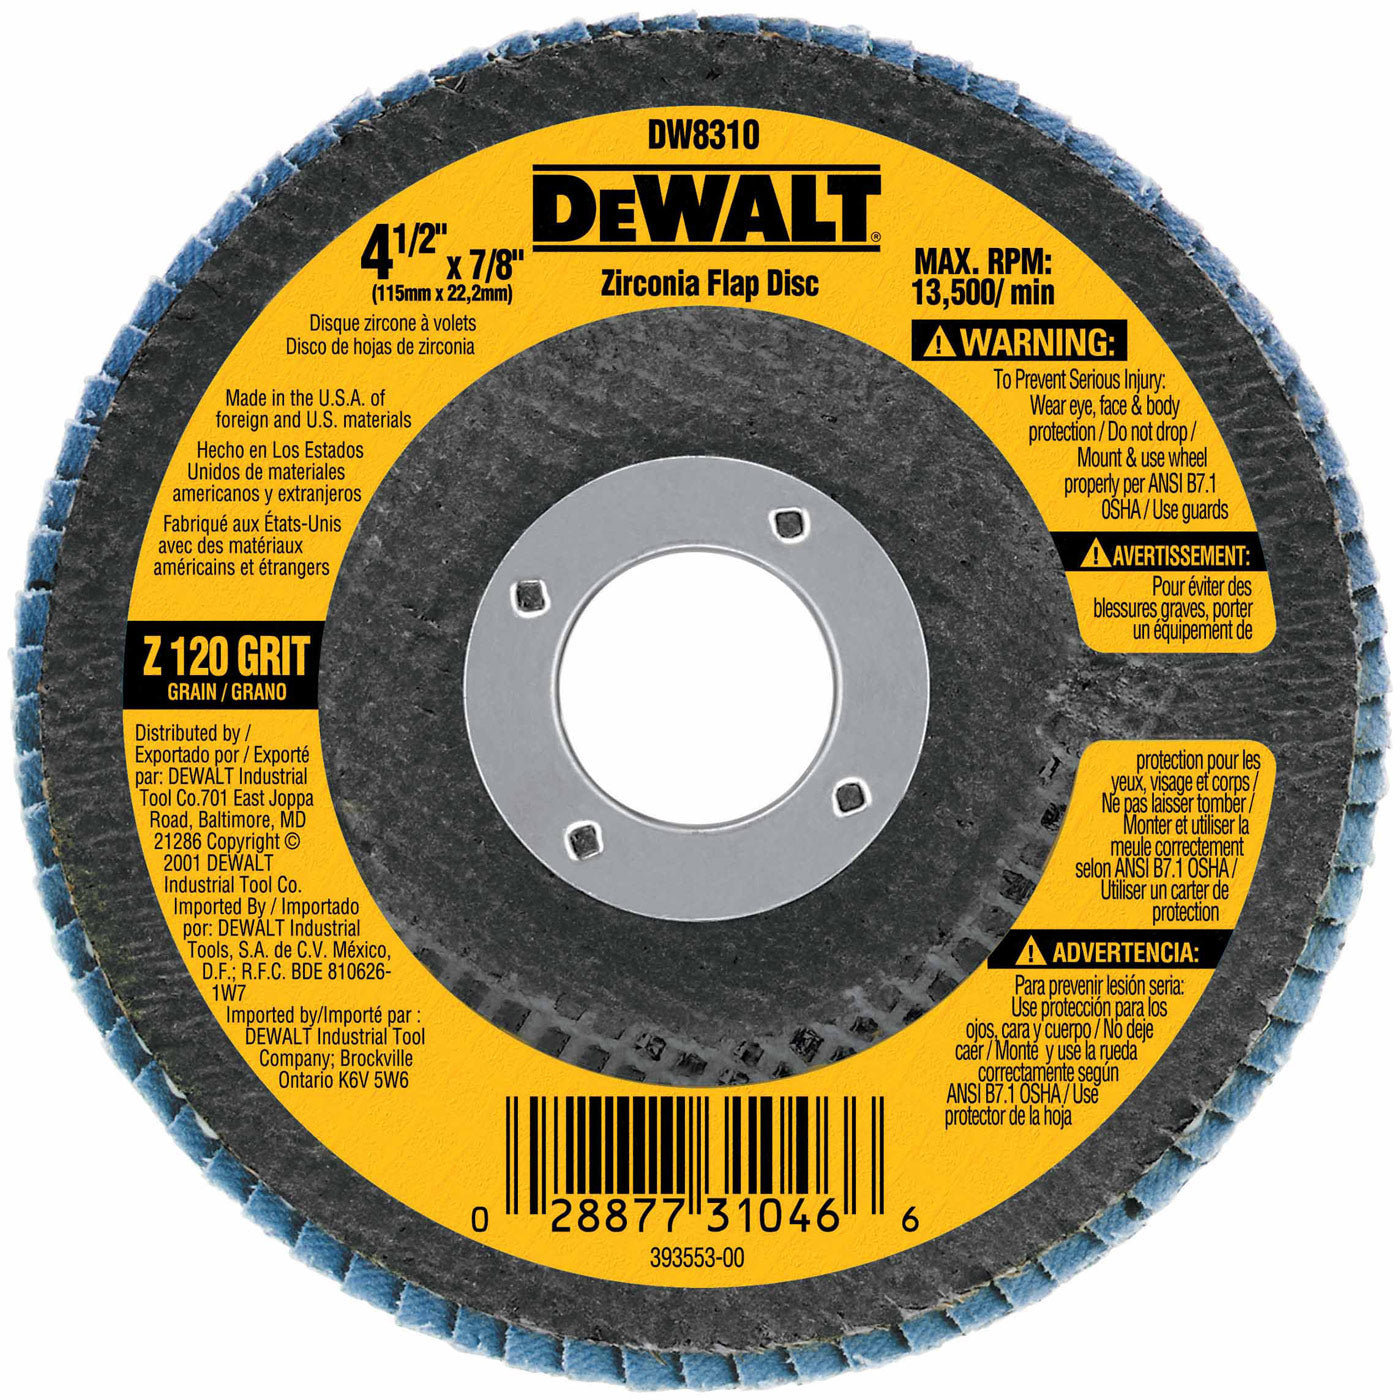 DeWalt DW8310 4-1/2" x 7/8" 120 Grit Zirconia Flap Disc